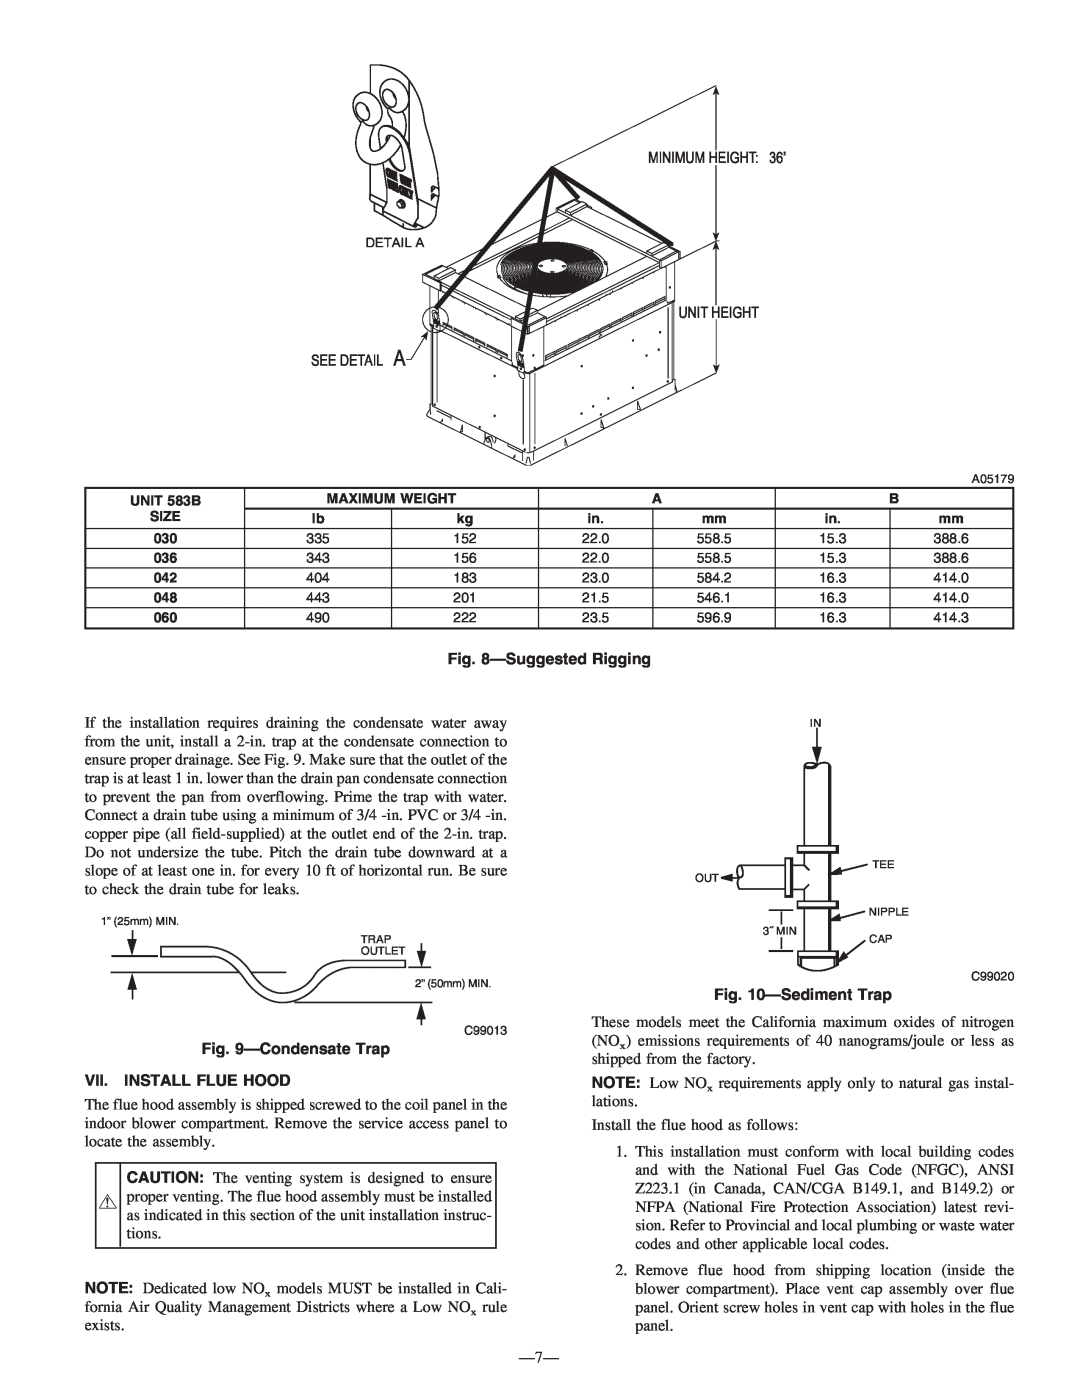 Bryant 583B instruction manual SuggestedRigging, CondensateTrap VII. INSTALL FLUE HOOD, SedimentTrap 